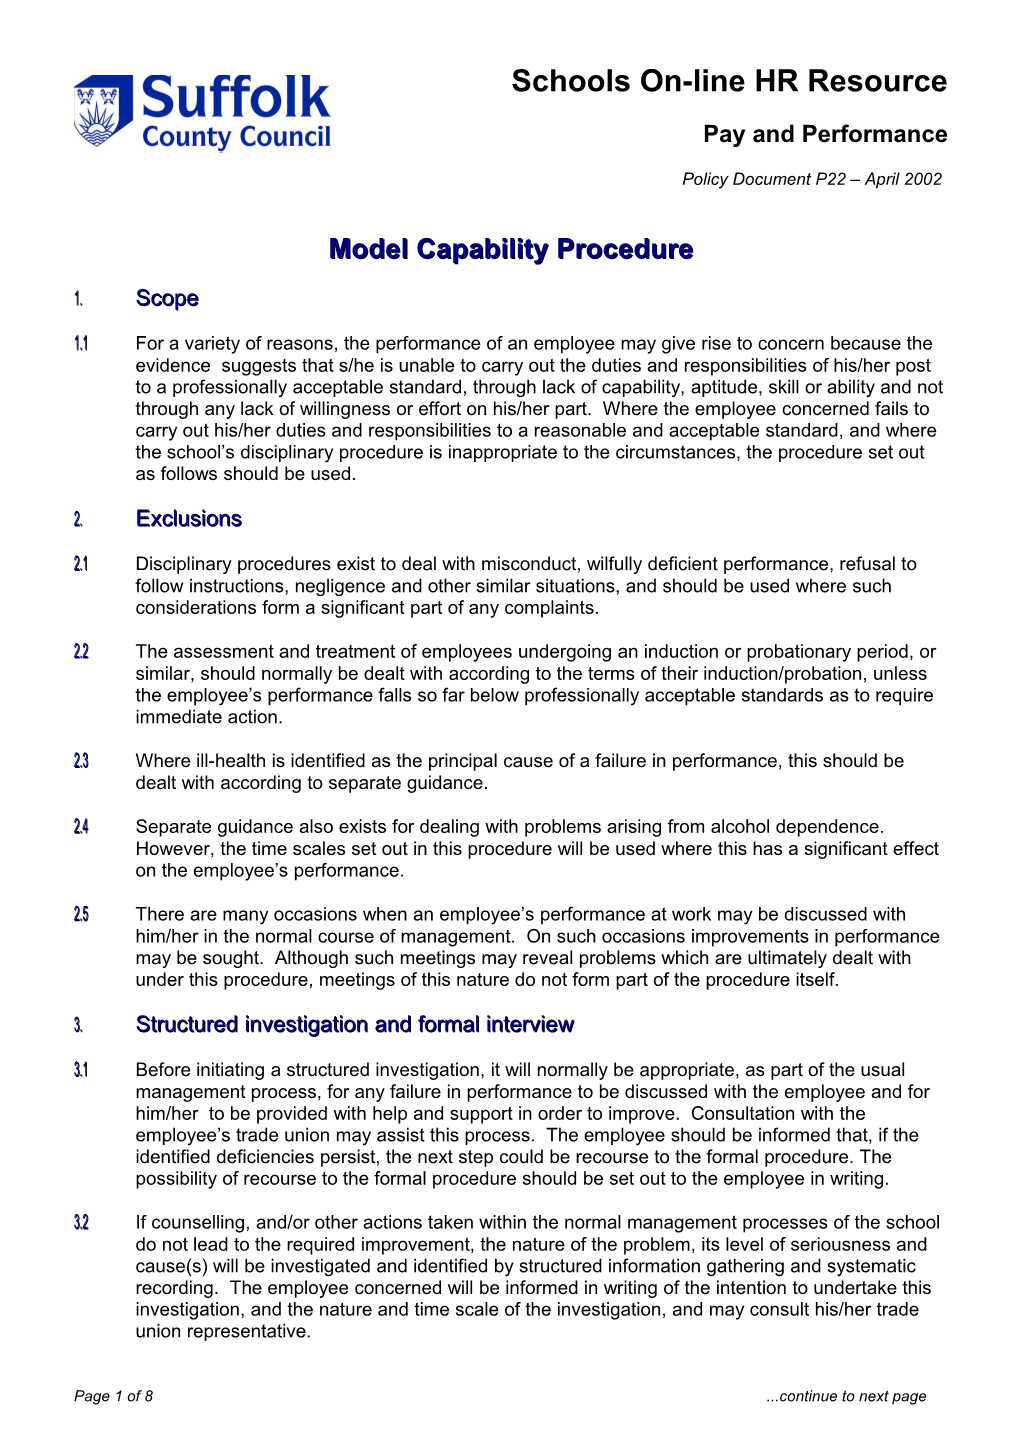 Model Capability Procedure